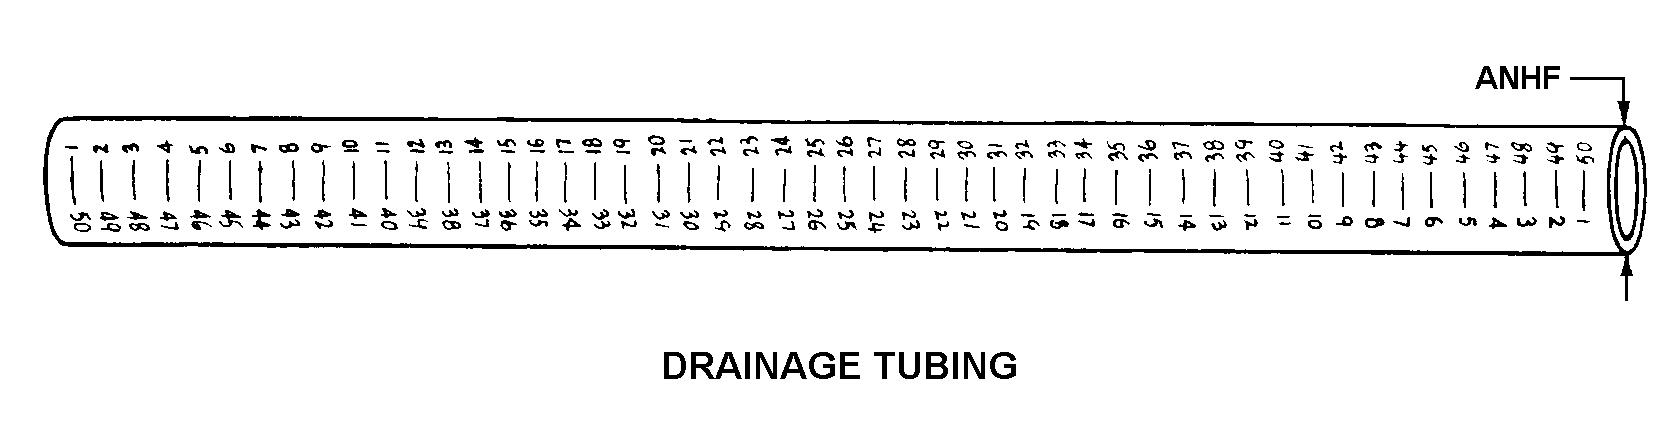 DRAINAGE TUBING style nsn 6515-01-426-0604